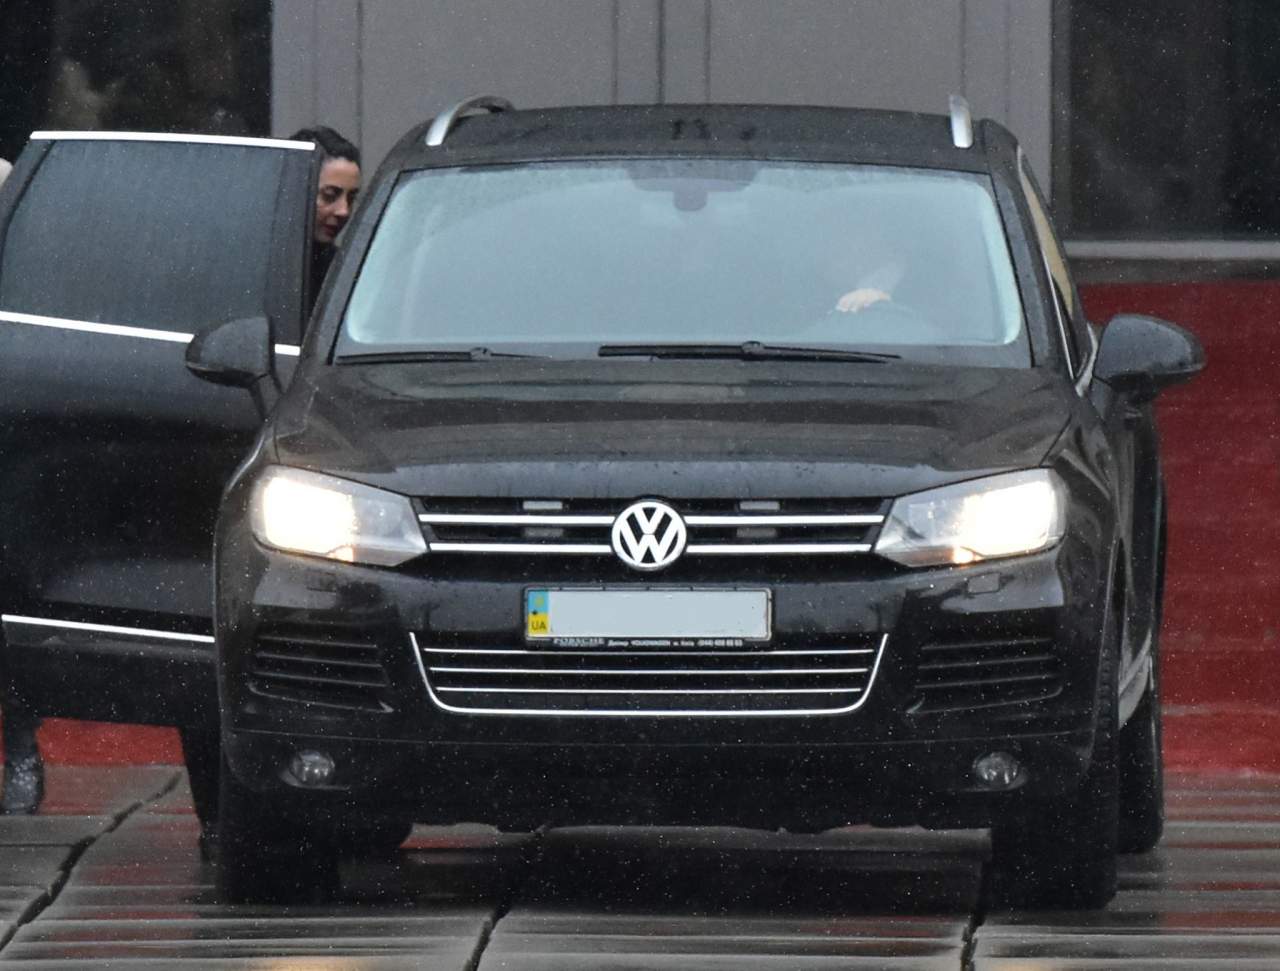 Хатия Деканоидзде ездит с водителем и охраной на джипе за 2 млн грн